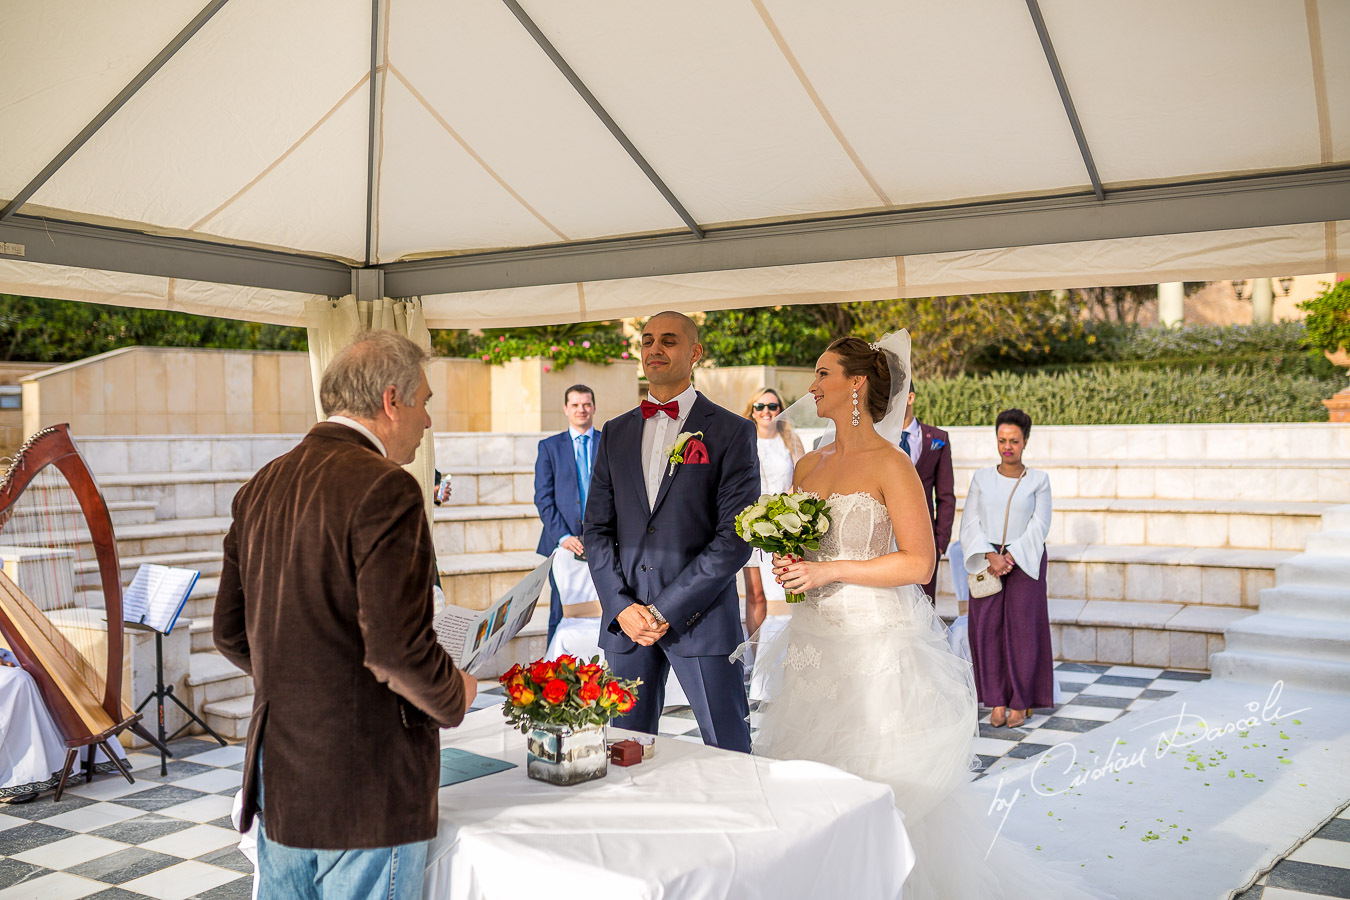 Wedding at The Elysium Hotel in Cyprus - 30